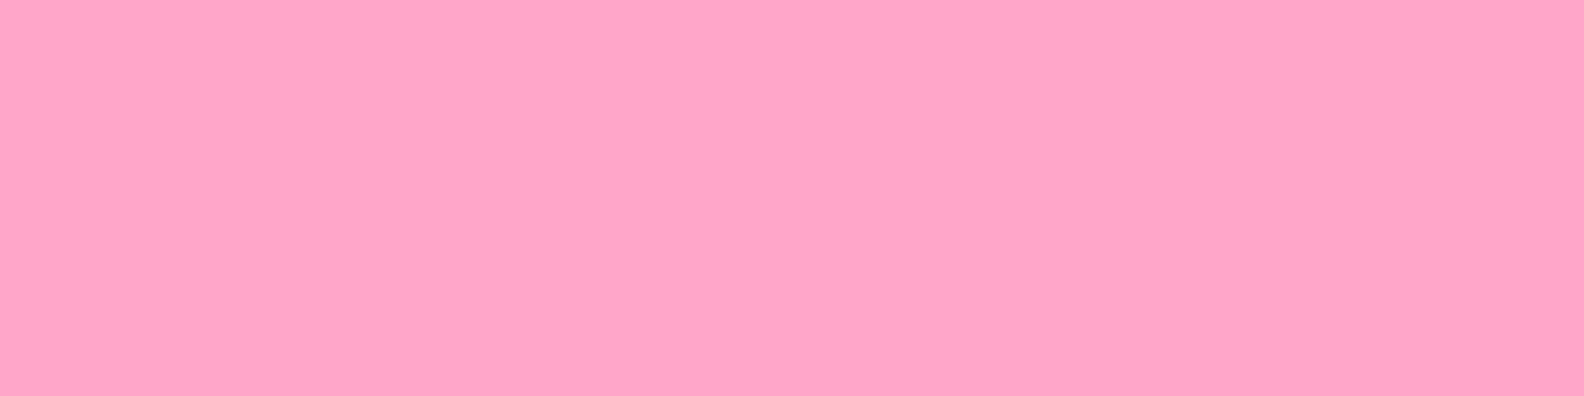 1584x396 Carnation Pink Solid Color Background